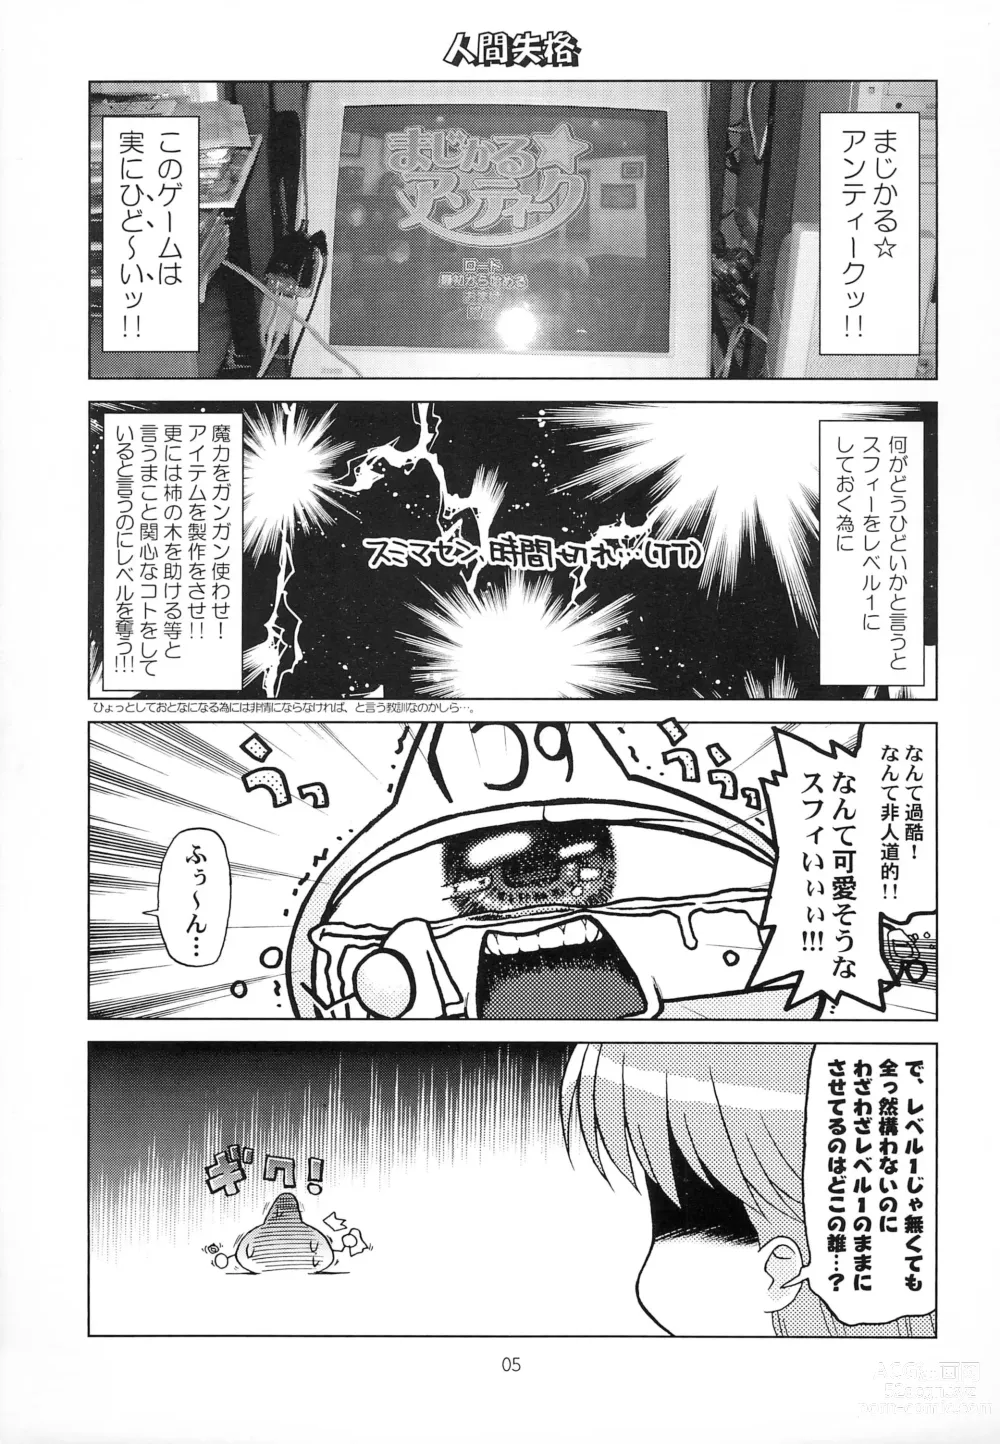 Page 5 of doujinshi CR27-gami Lv.2